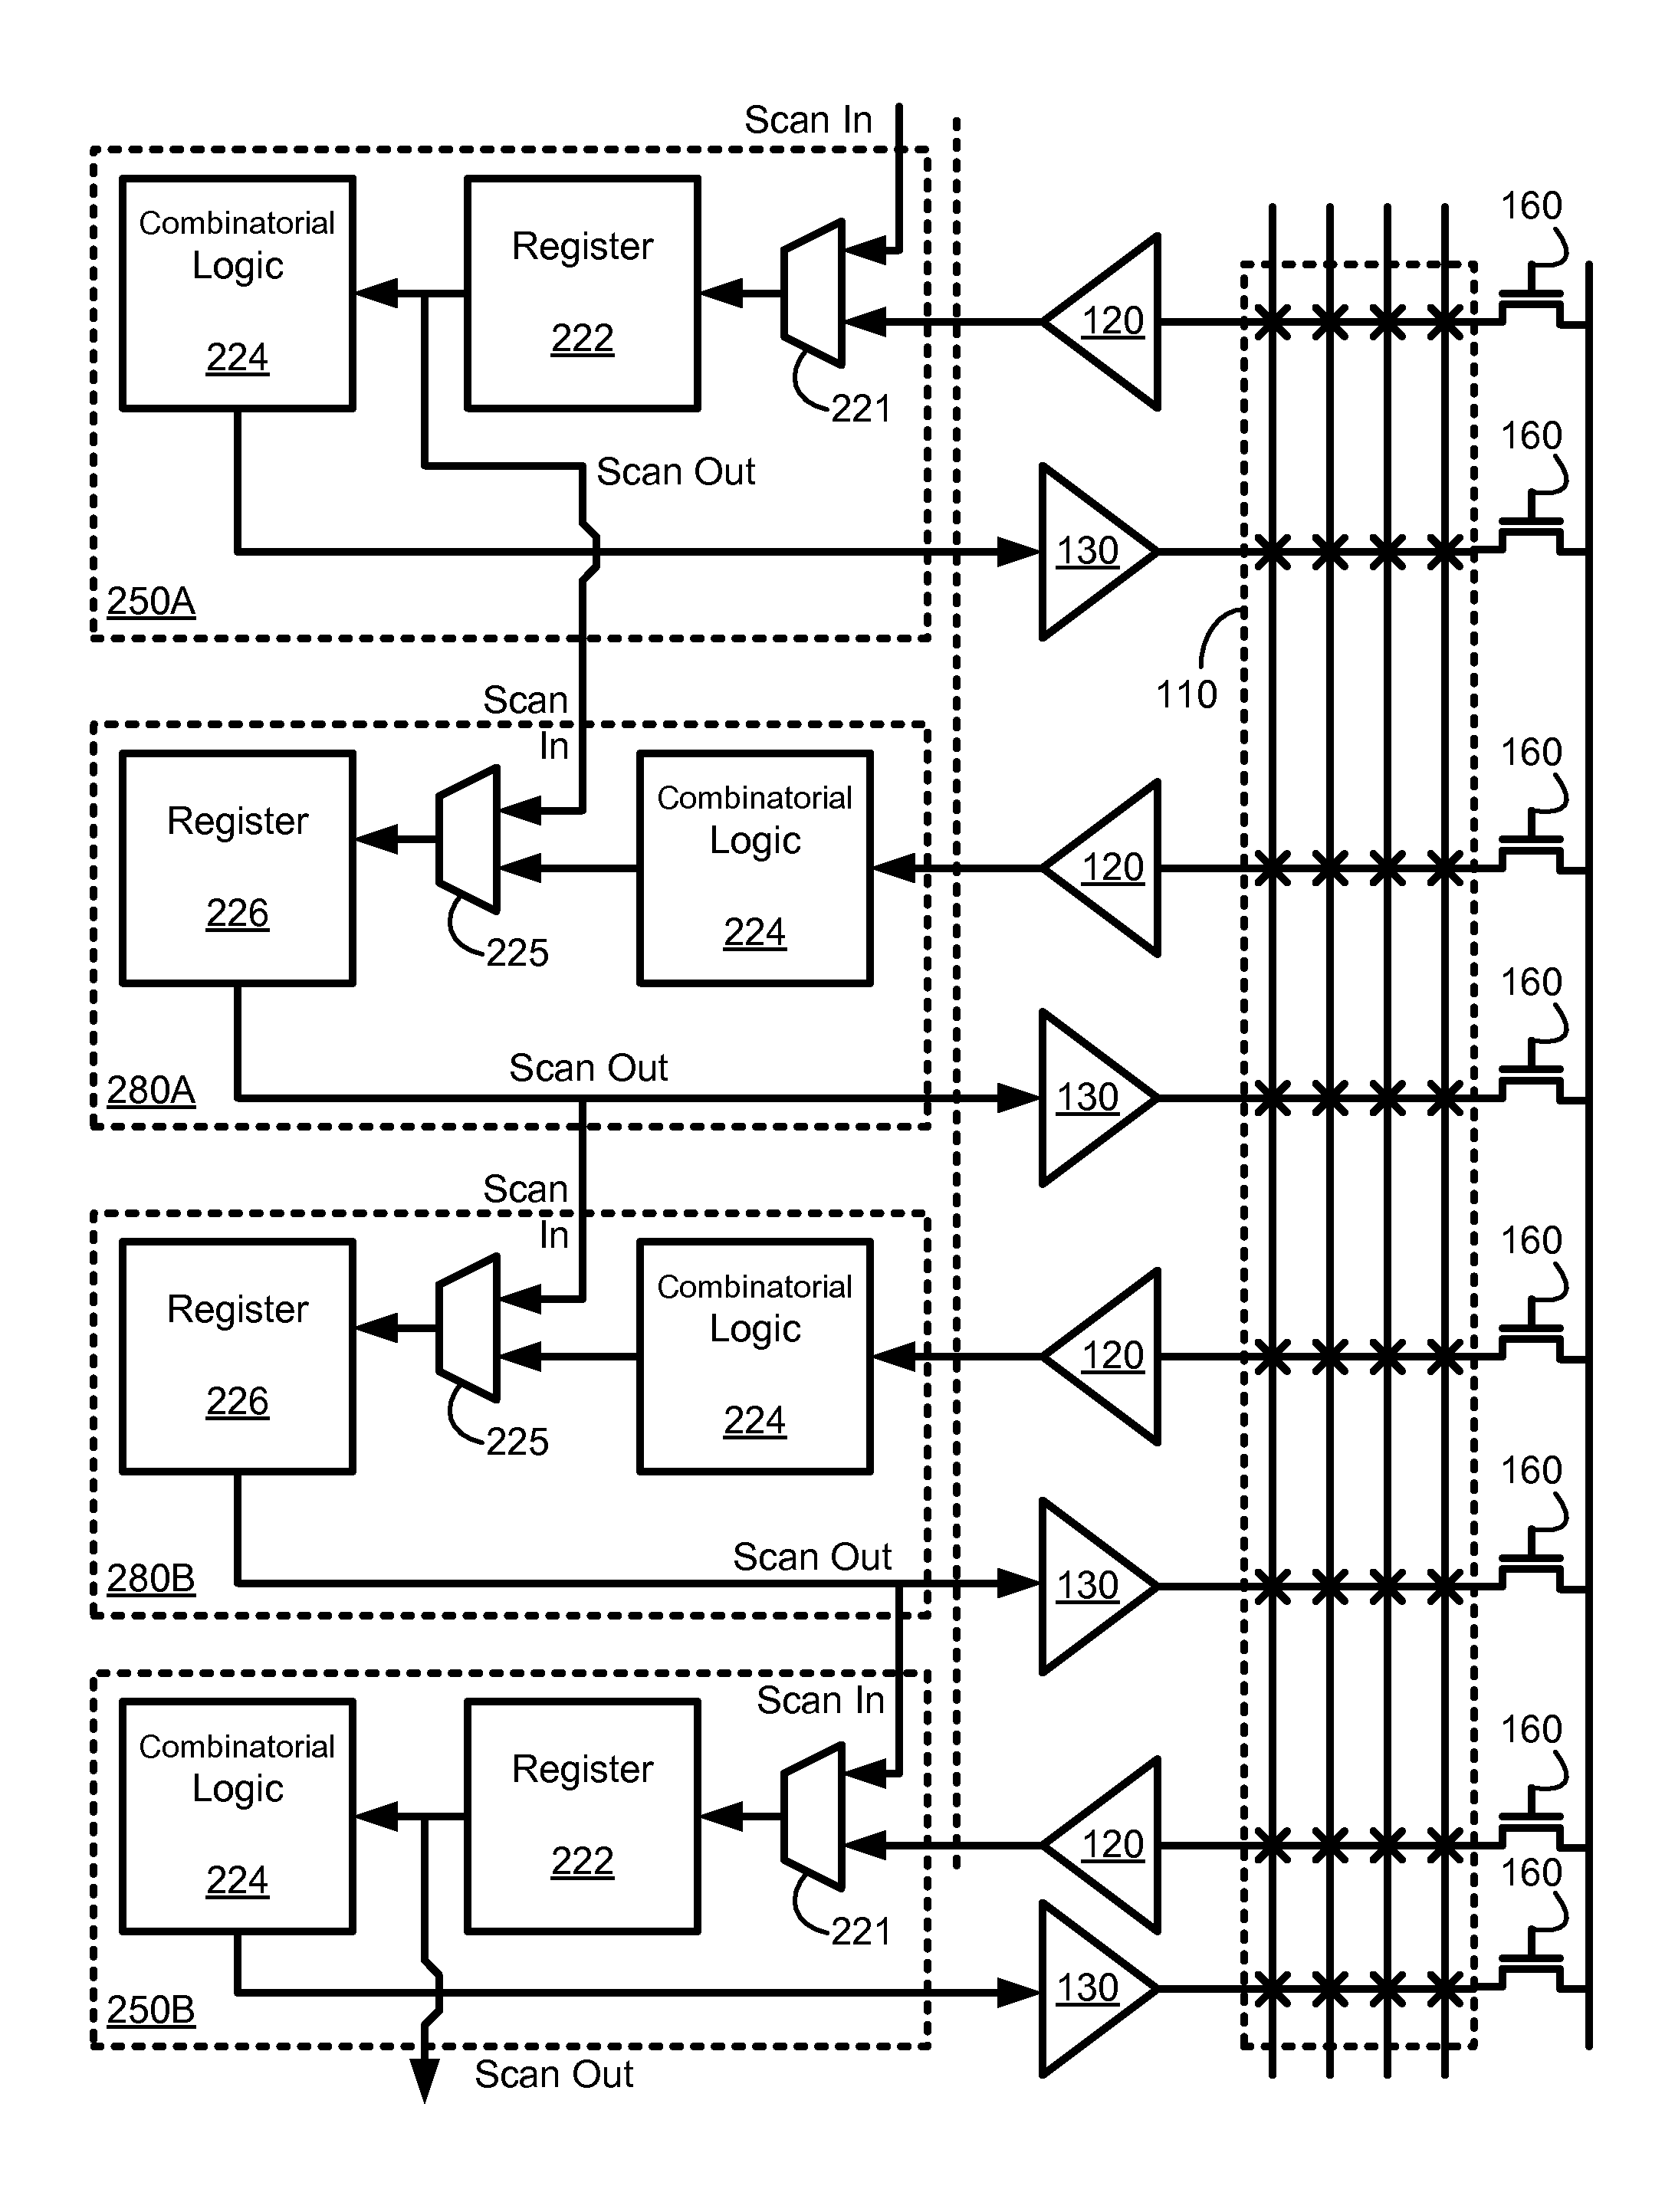 FPGA programming structure for ATPG test coverage